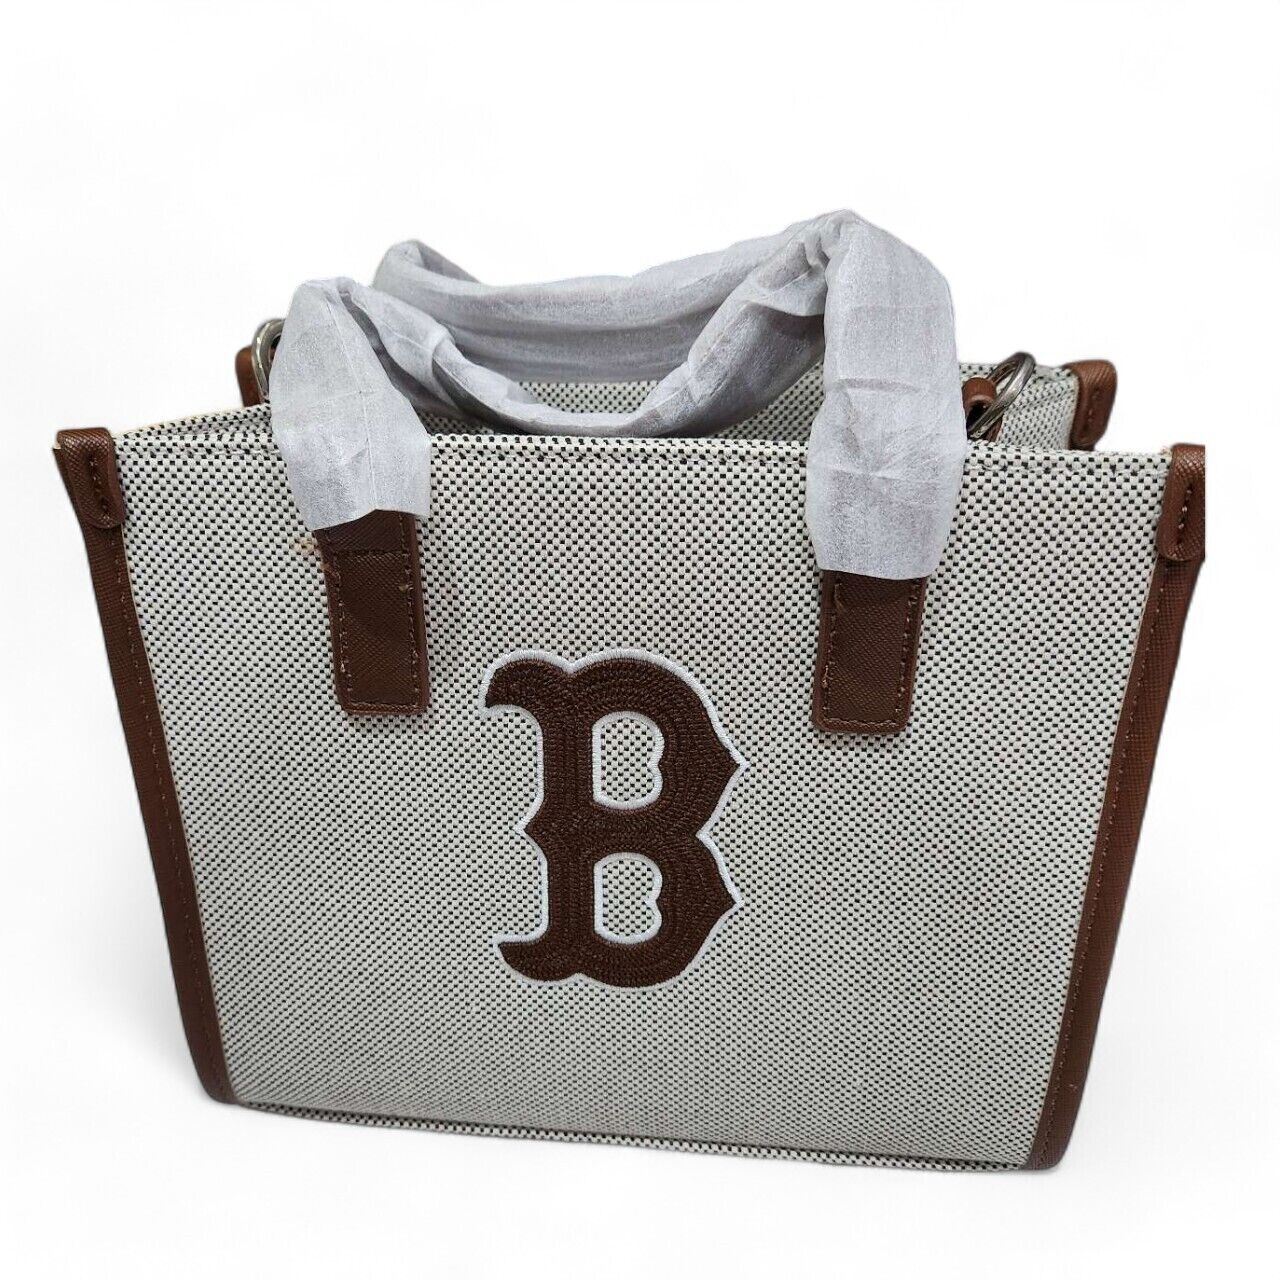 MLB Canvas Satchel Bag New York